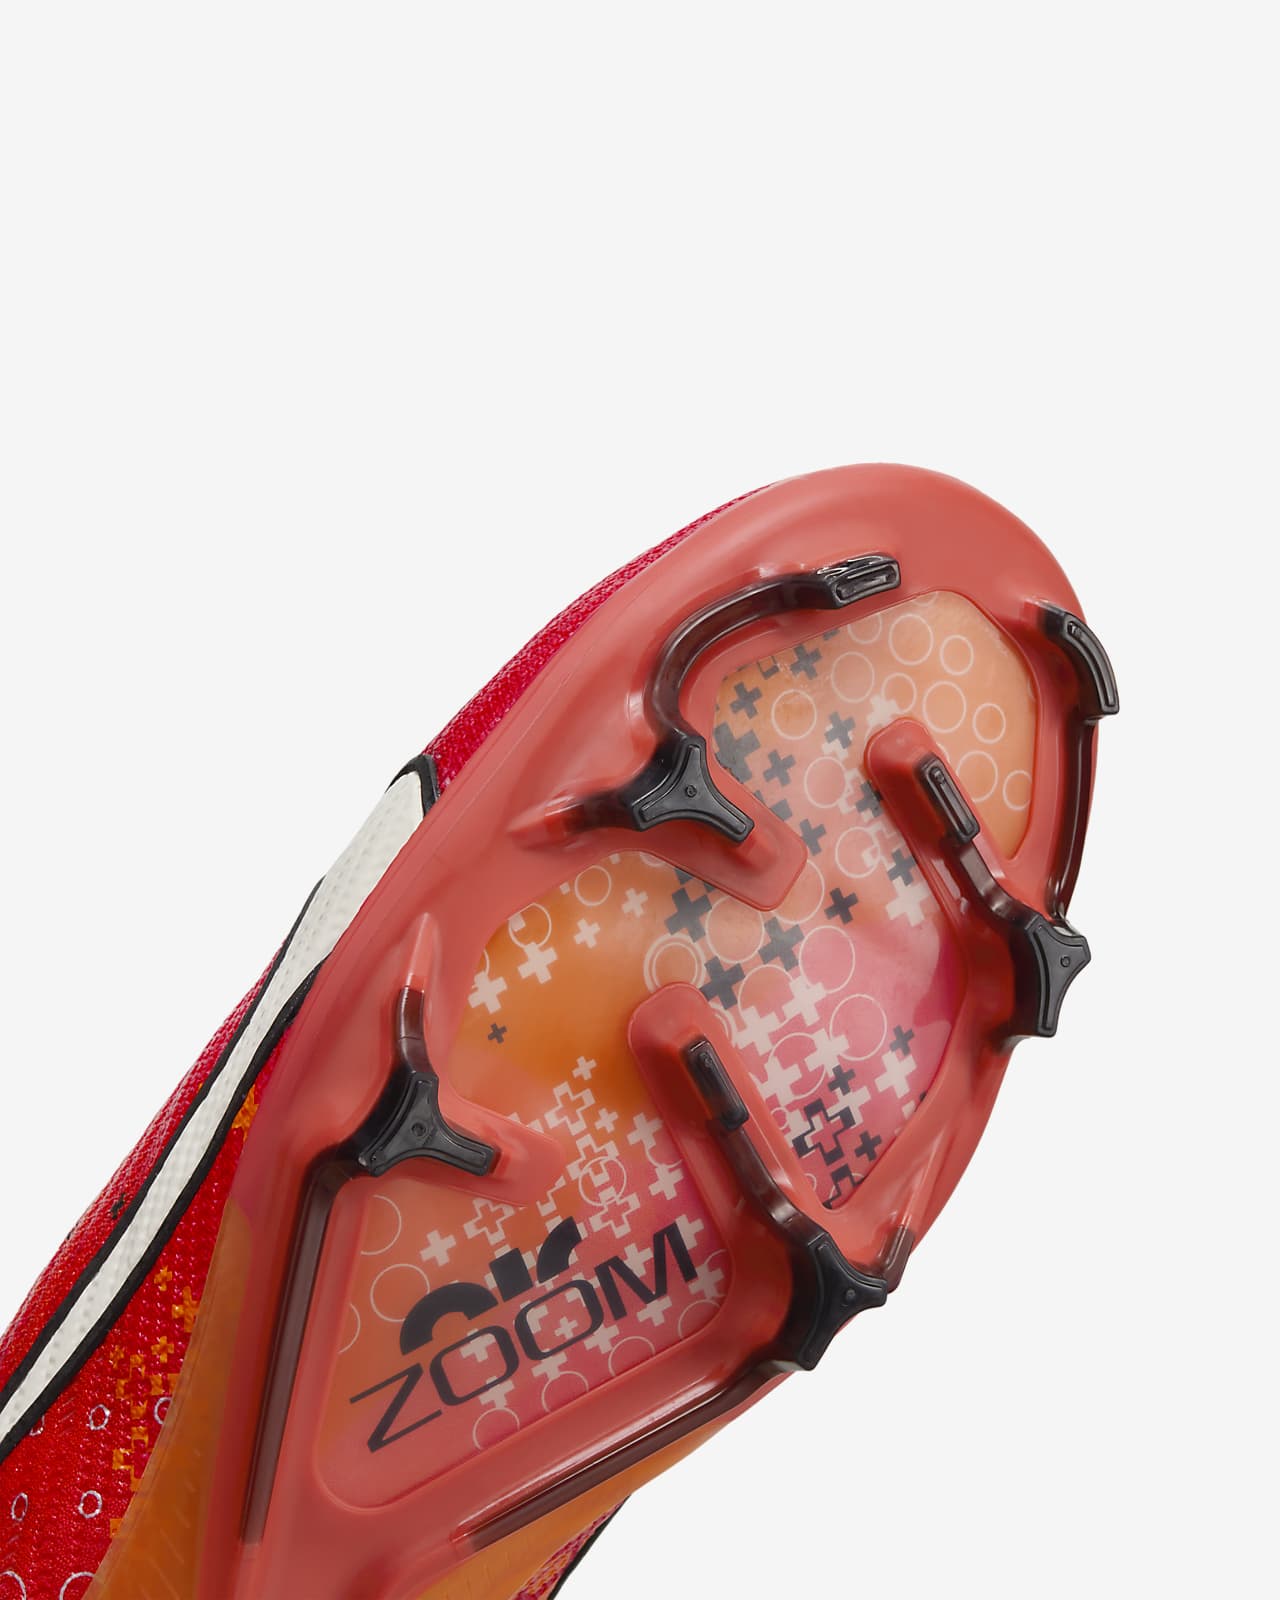 Chaussures de football Nike Mercurial Superfly 9 Elite FG Rouge